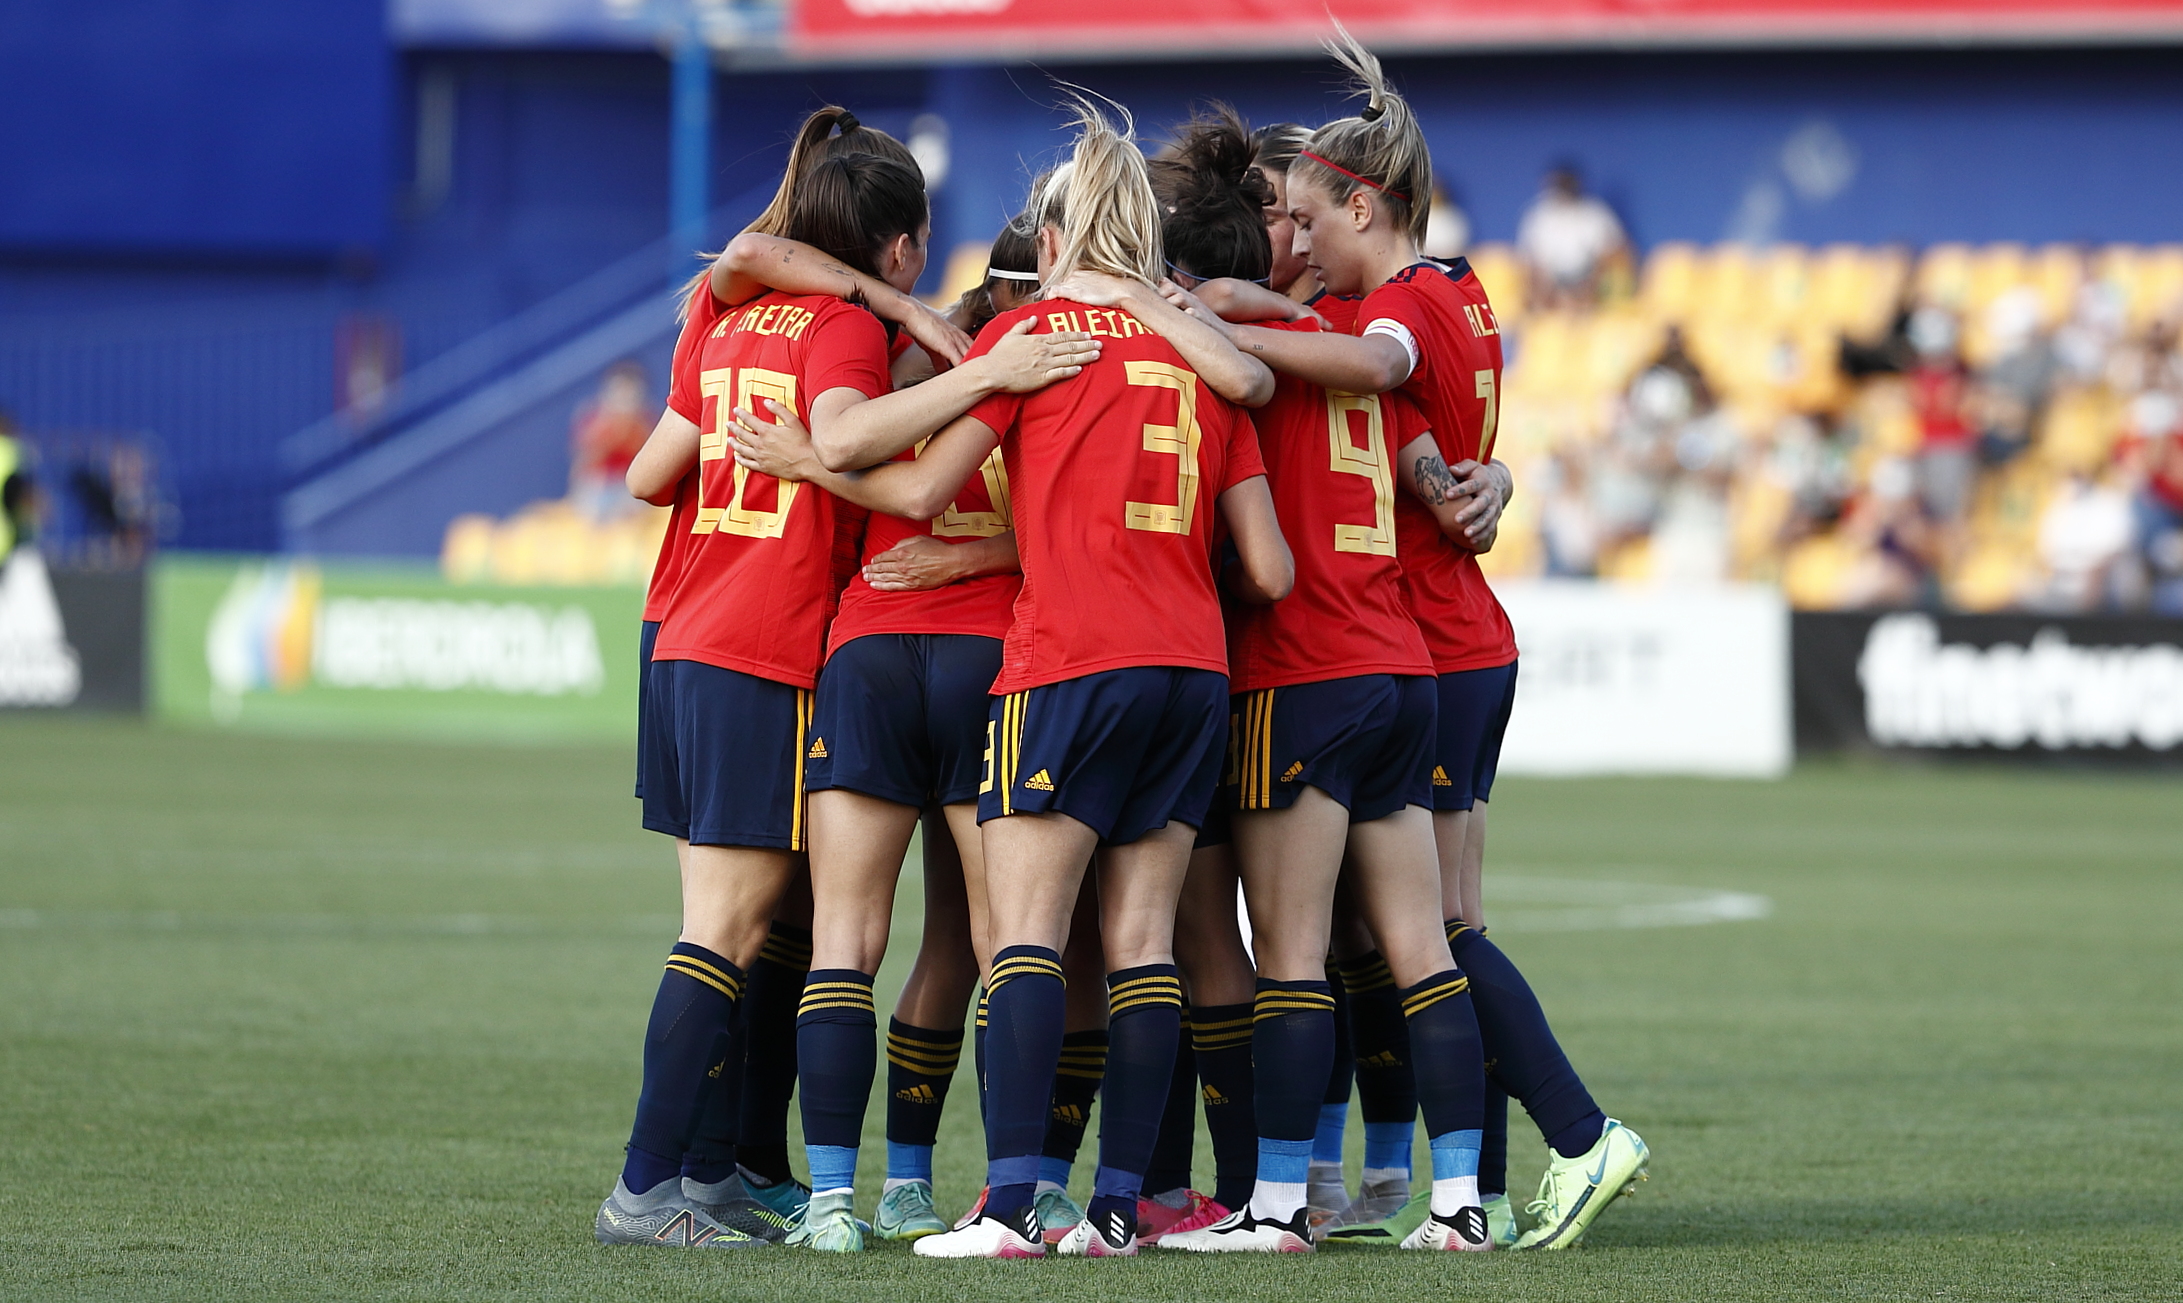 Selección Española Femenina de Fútbol on Twitter: "📝 I La Selección española femenina no conoce límites. 🇪🇸🆚🇩🇰 I 3-0 #JugarLucharYganar 🔗 https://t.co/ujIInTxkUs https://t.co/Swg8m1rMFm" / Twitter